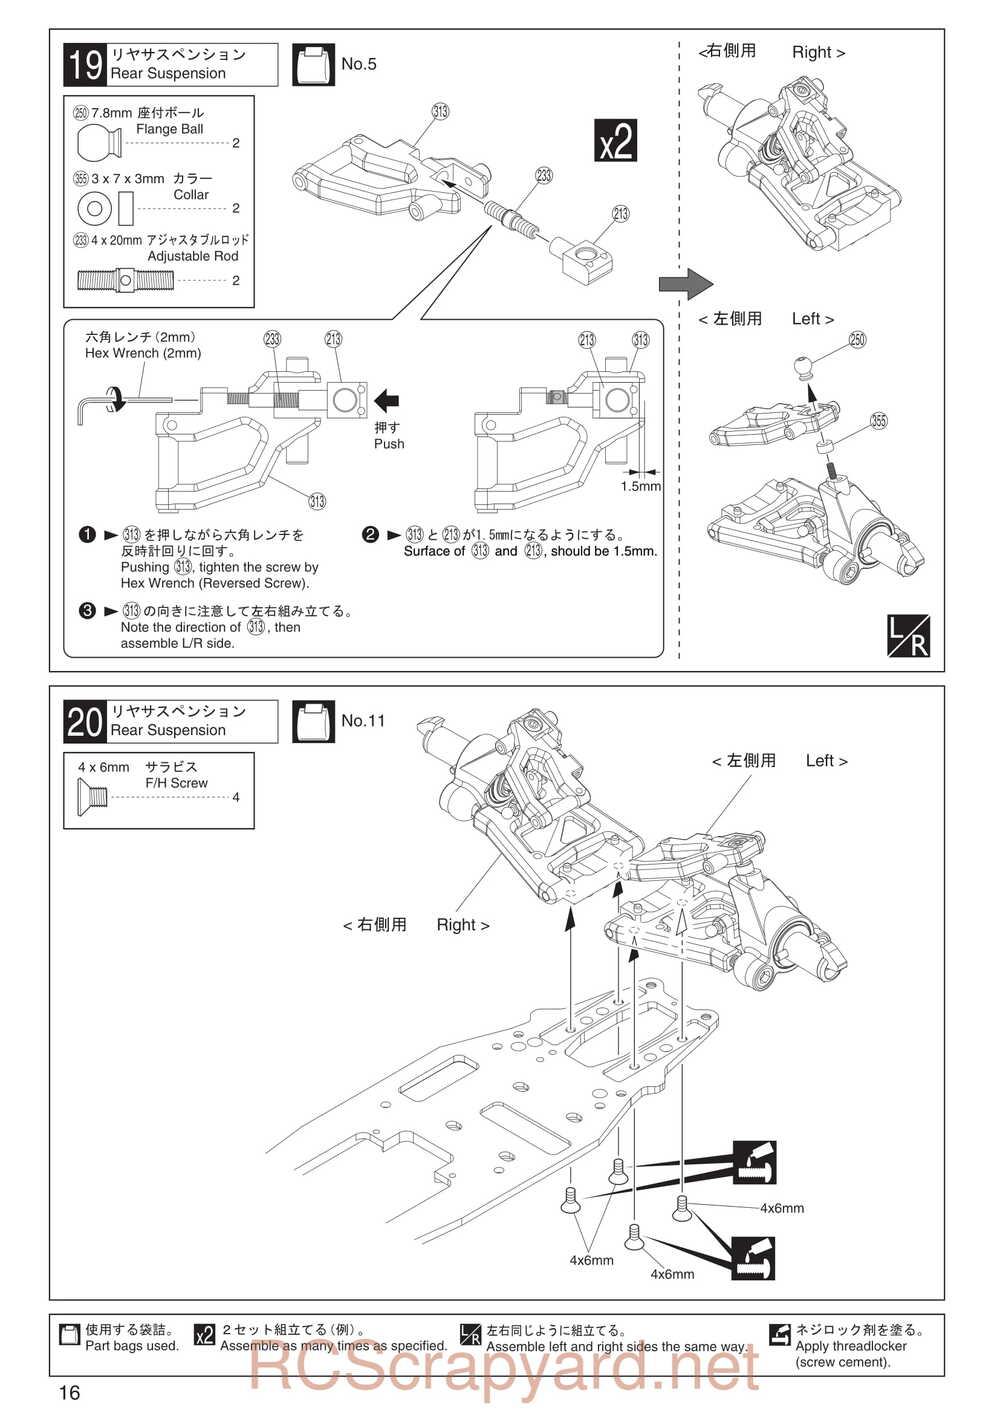 Kyosho - 31283 - Evolva-2003 - Manual - Page 16